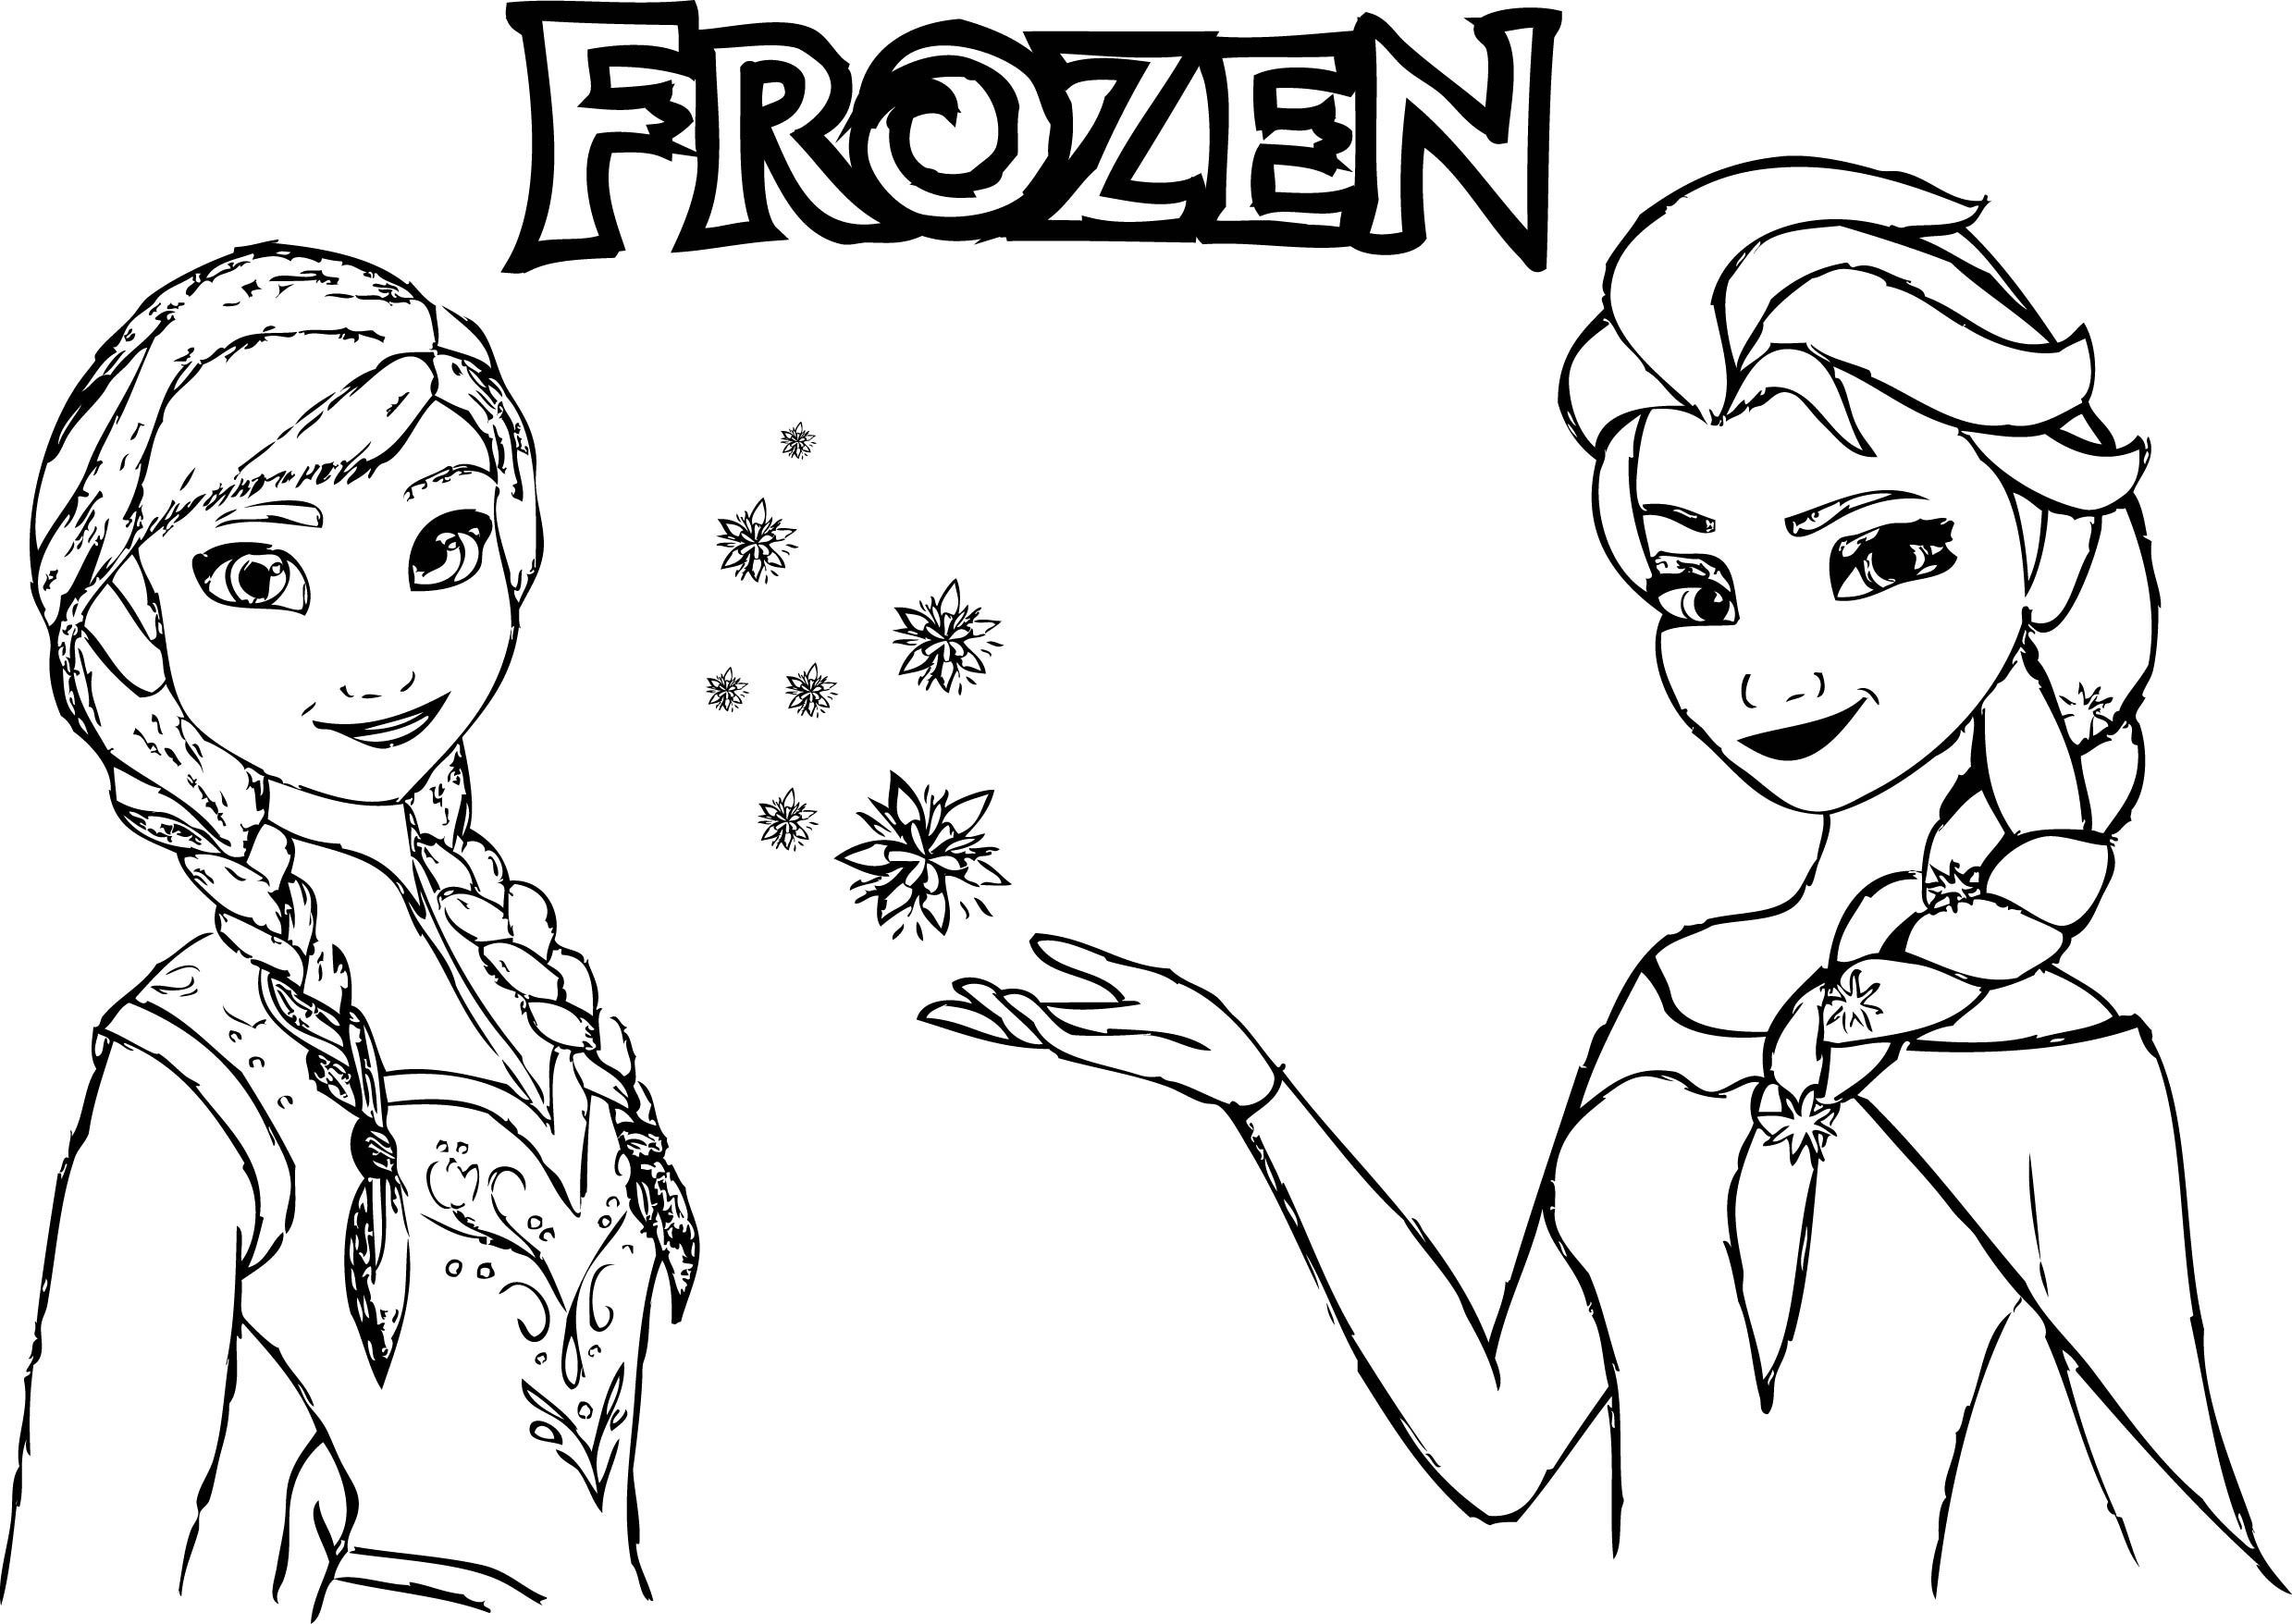 Frozen Elsa 20 Coloring Pages   Coloring Cool